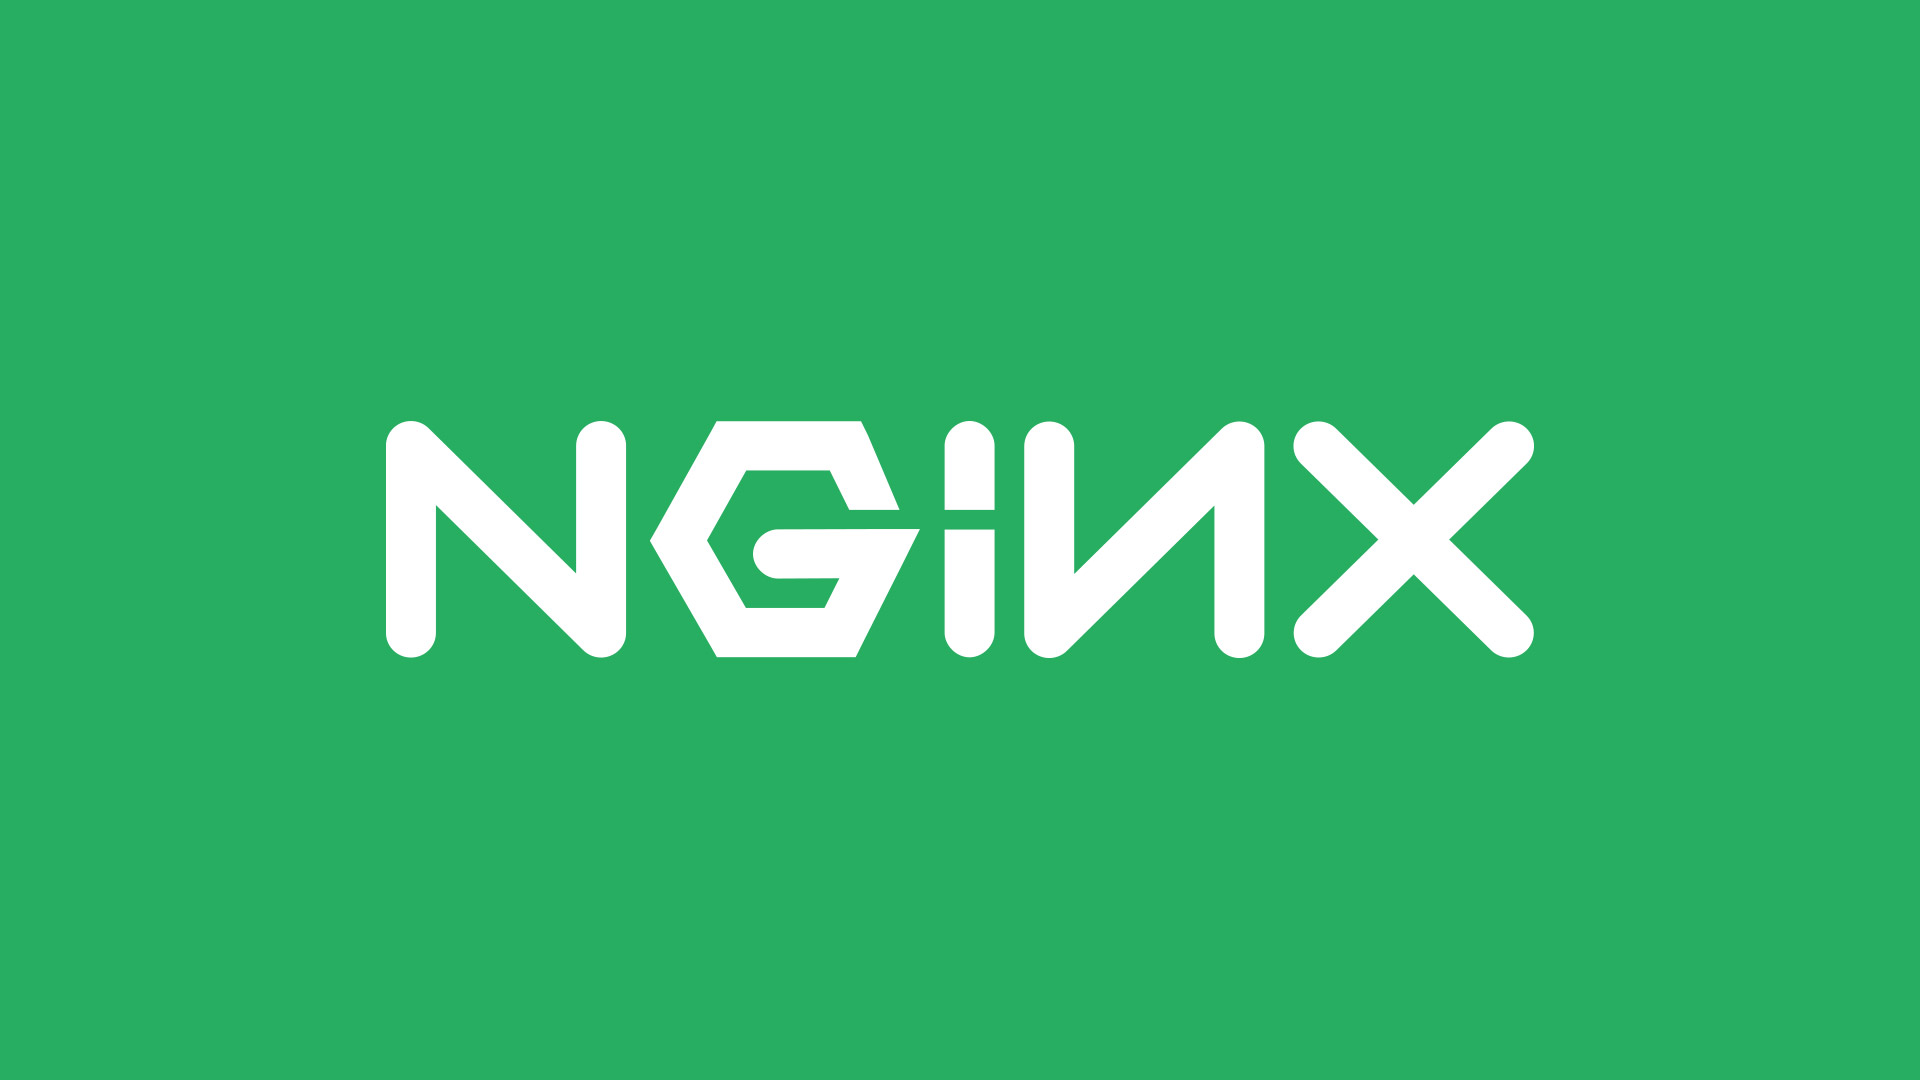 Nginx connection. Nginx логотип. Веб сервер nginx. Nginx PNG. Веб сервер nginx лого.